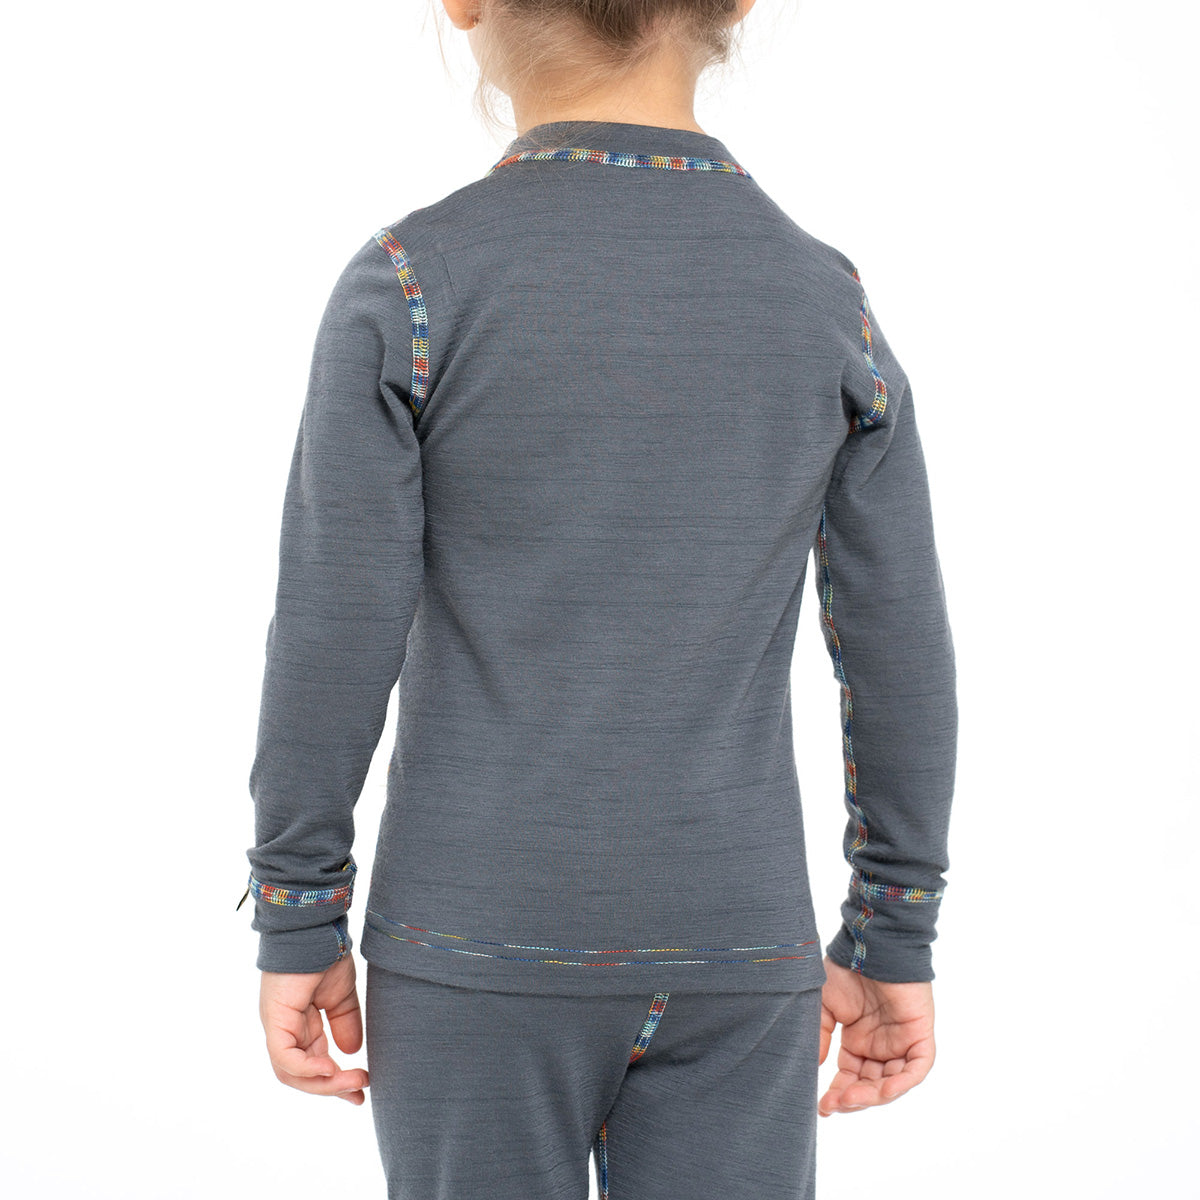 MENIQUE Long Sleeve Crew 100% Merino Wool Kids Shirt Perfect Grey